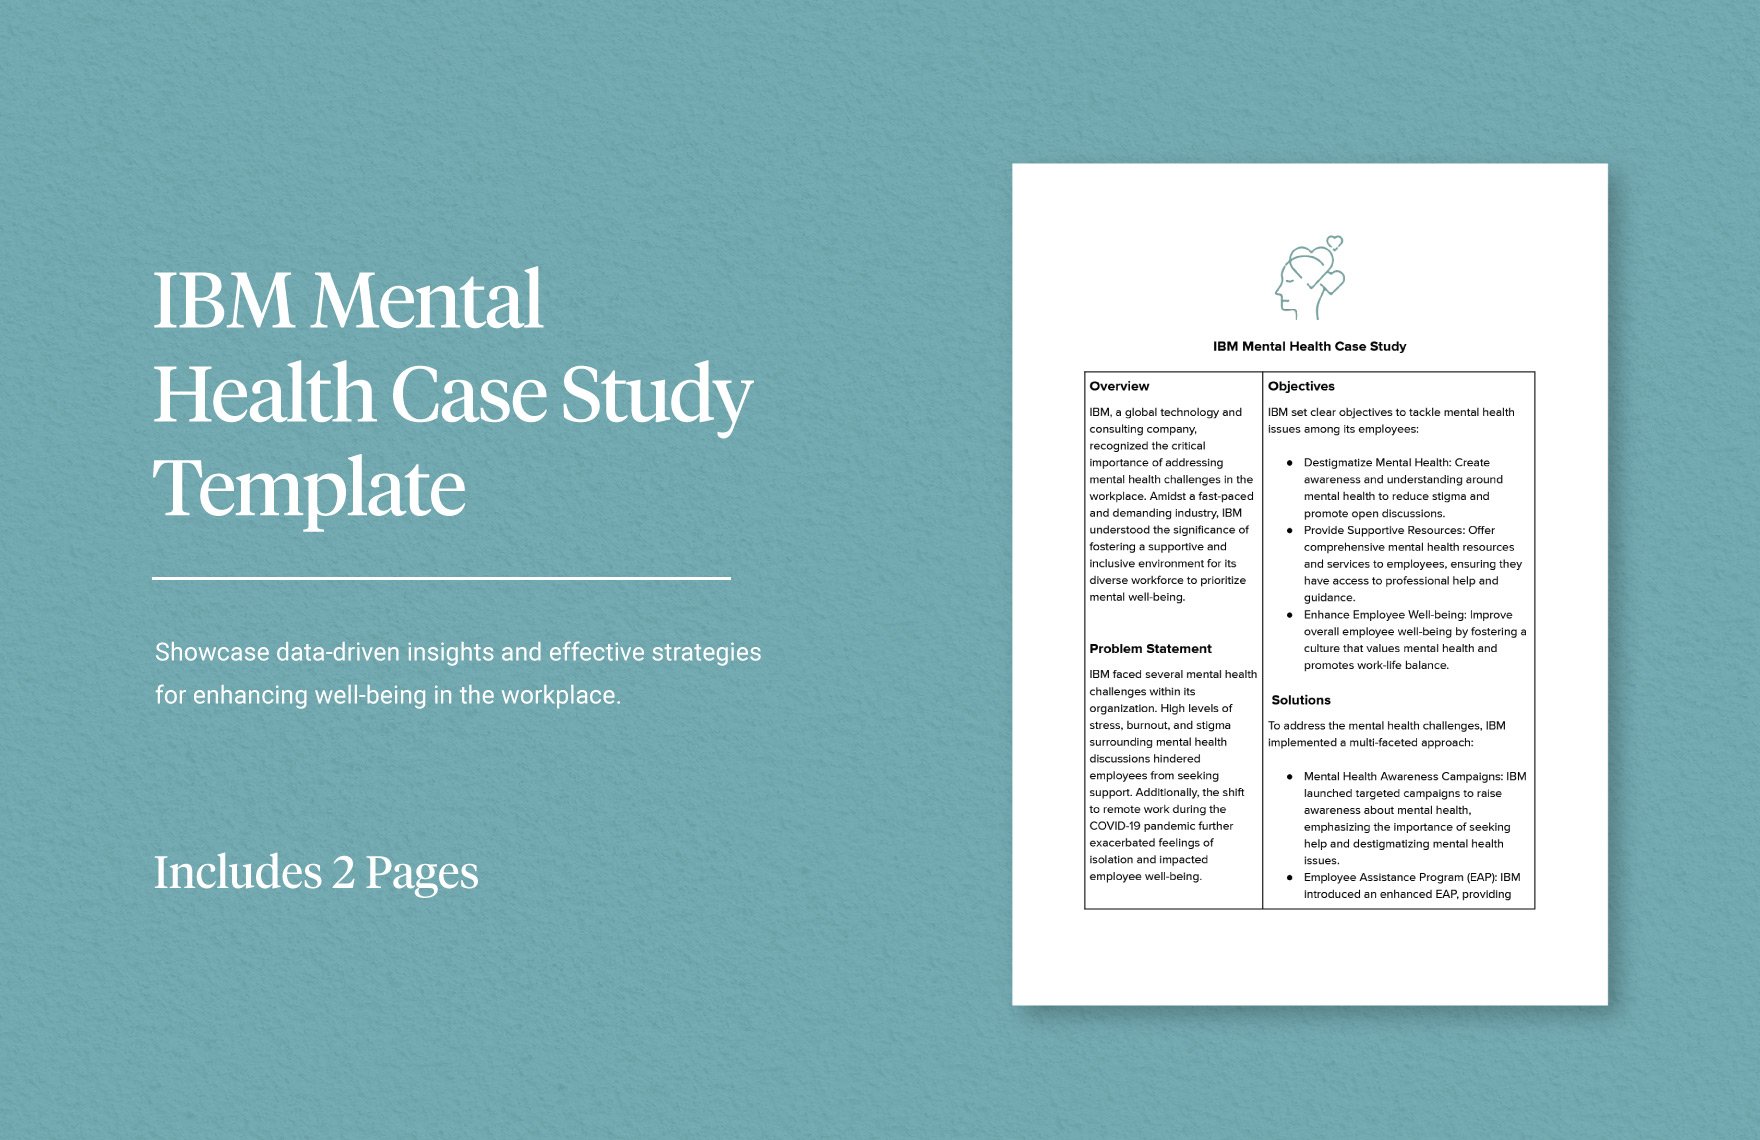 IBM Mental Health Case Study Template